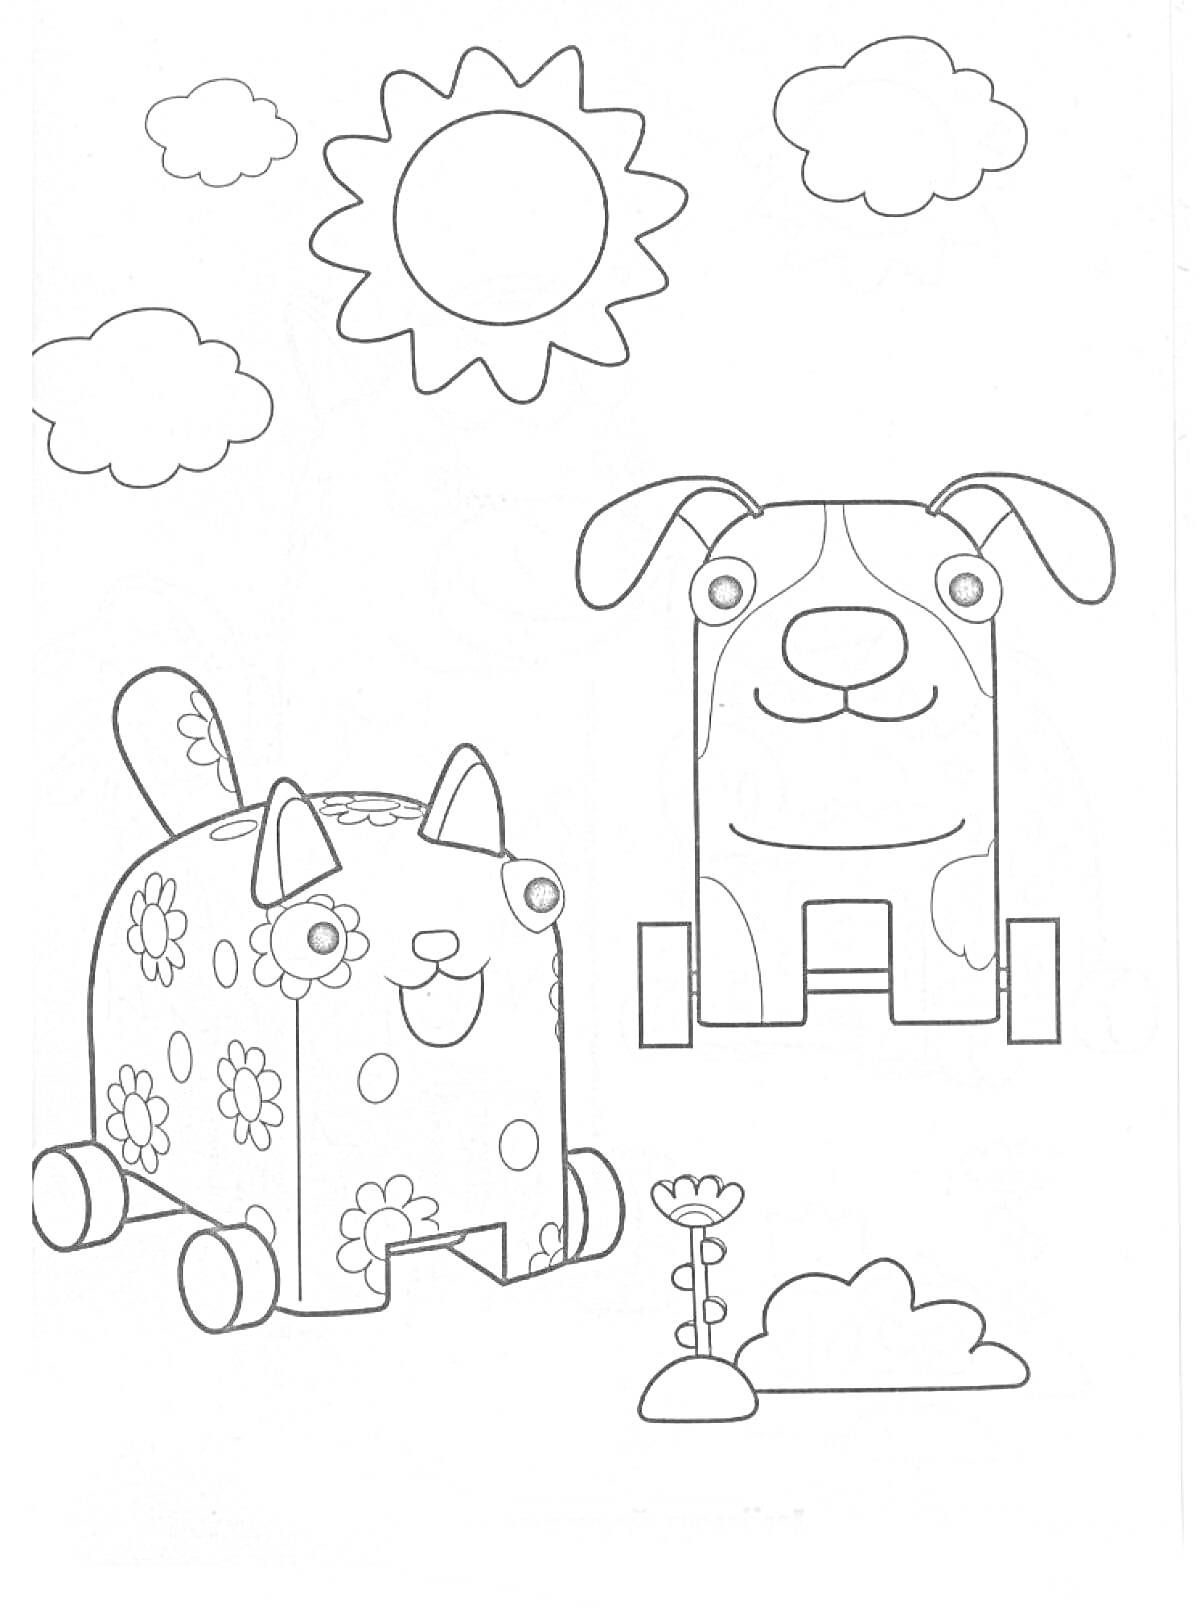 Деревяшки - кошка и собака с цветами, солнцем, облаками и кустиком